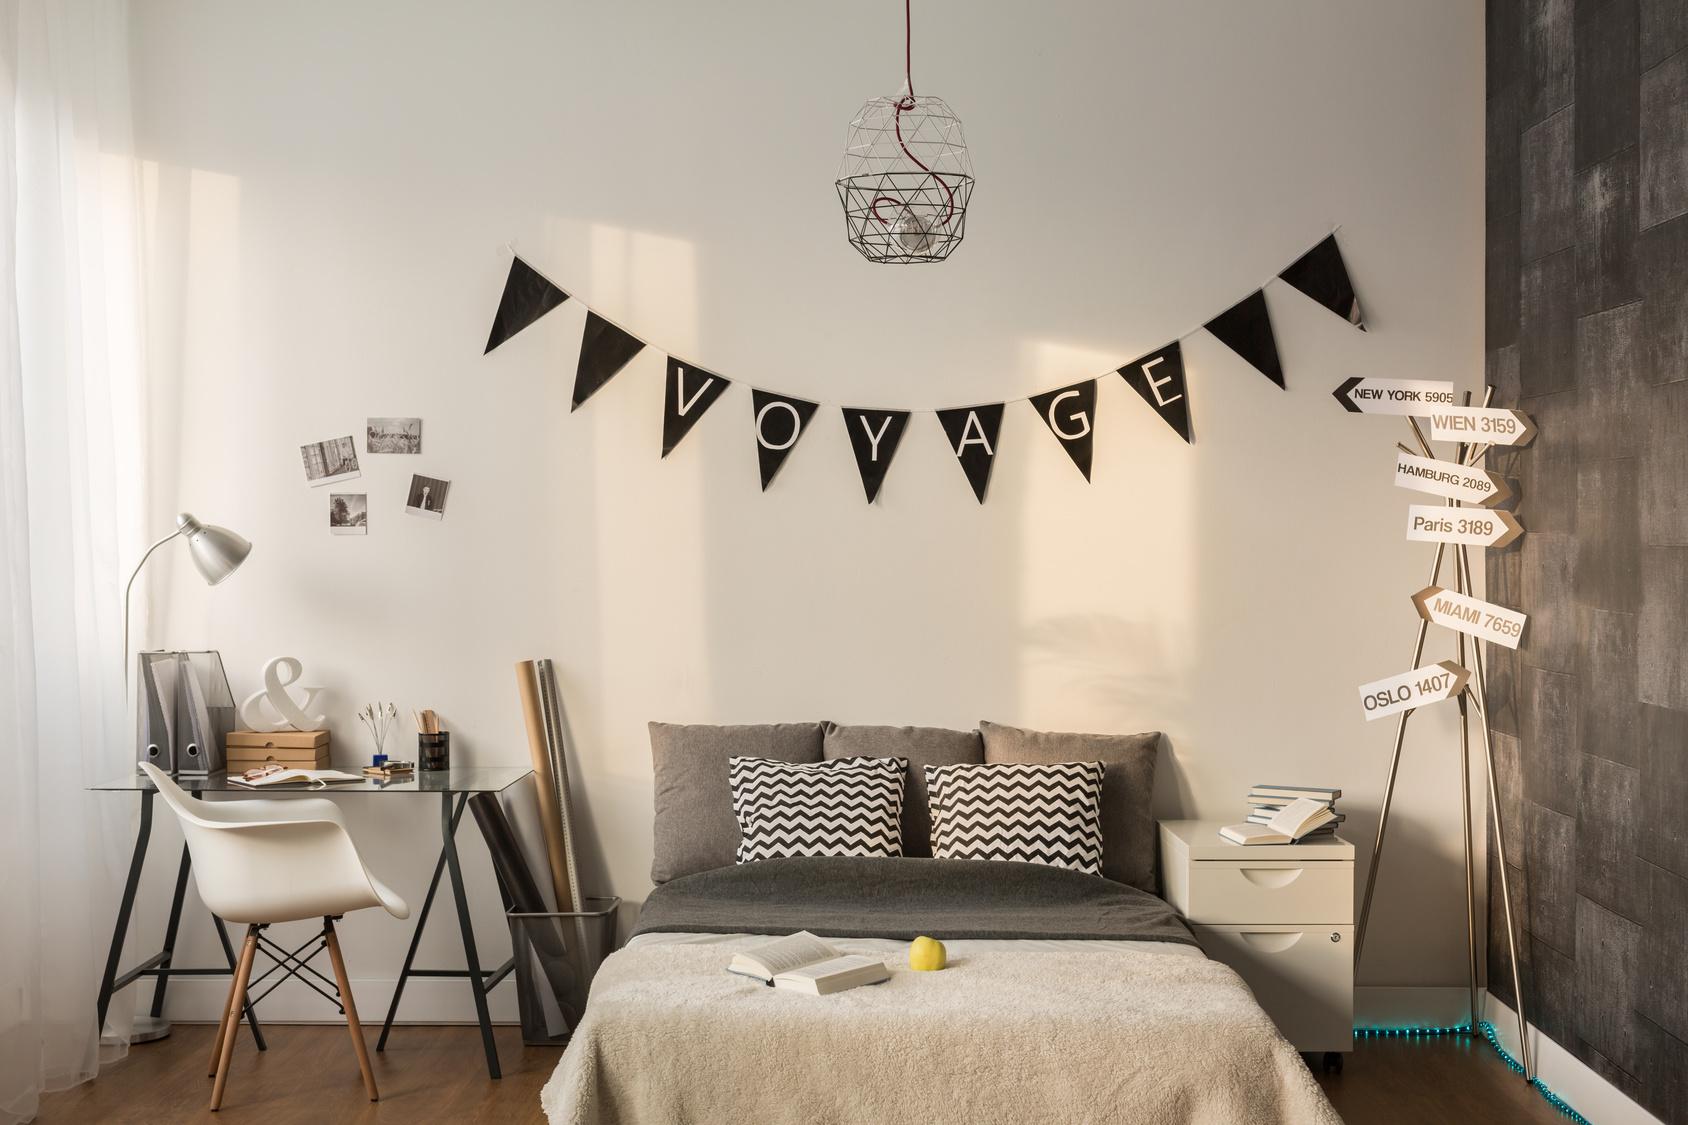 Schlafzimmer #skandinavischesdesign #nordicstyle ©Photographee.eu - Fotolia